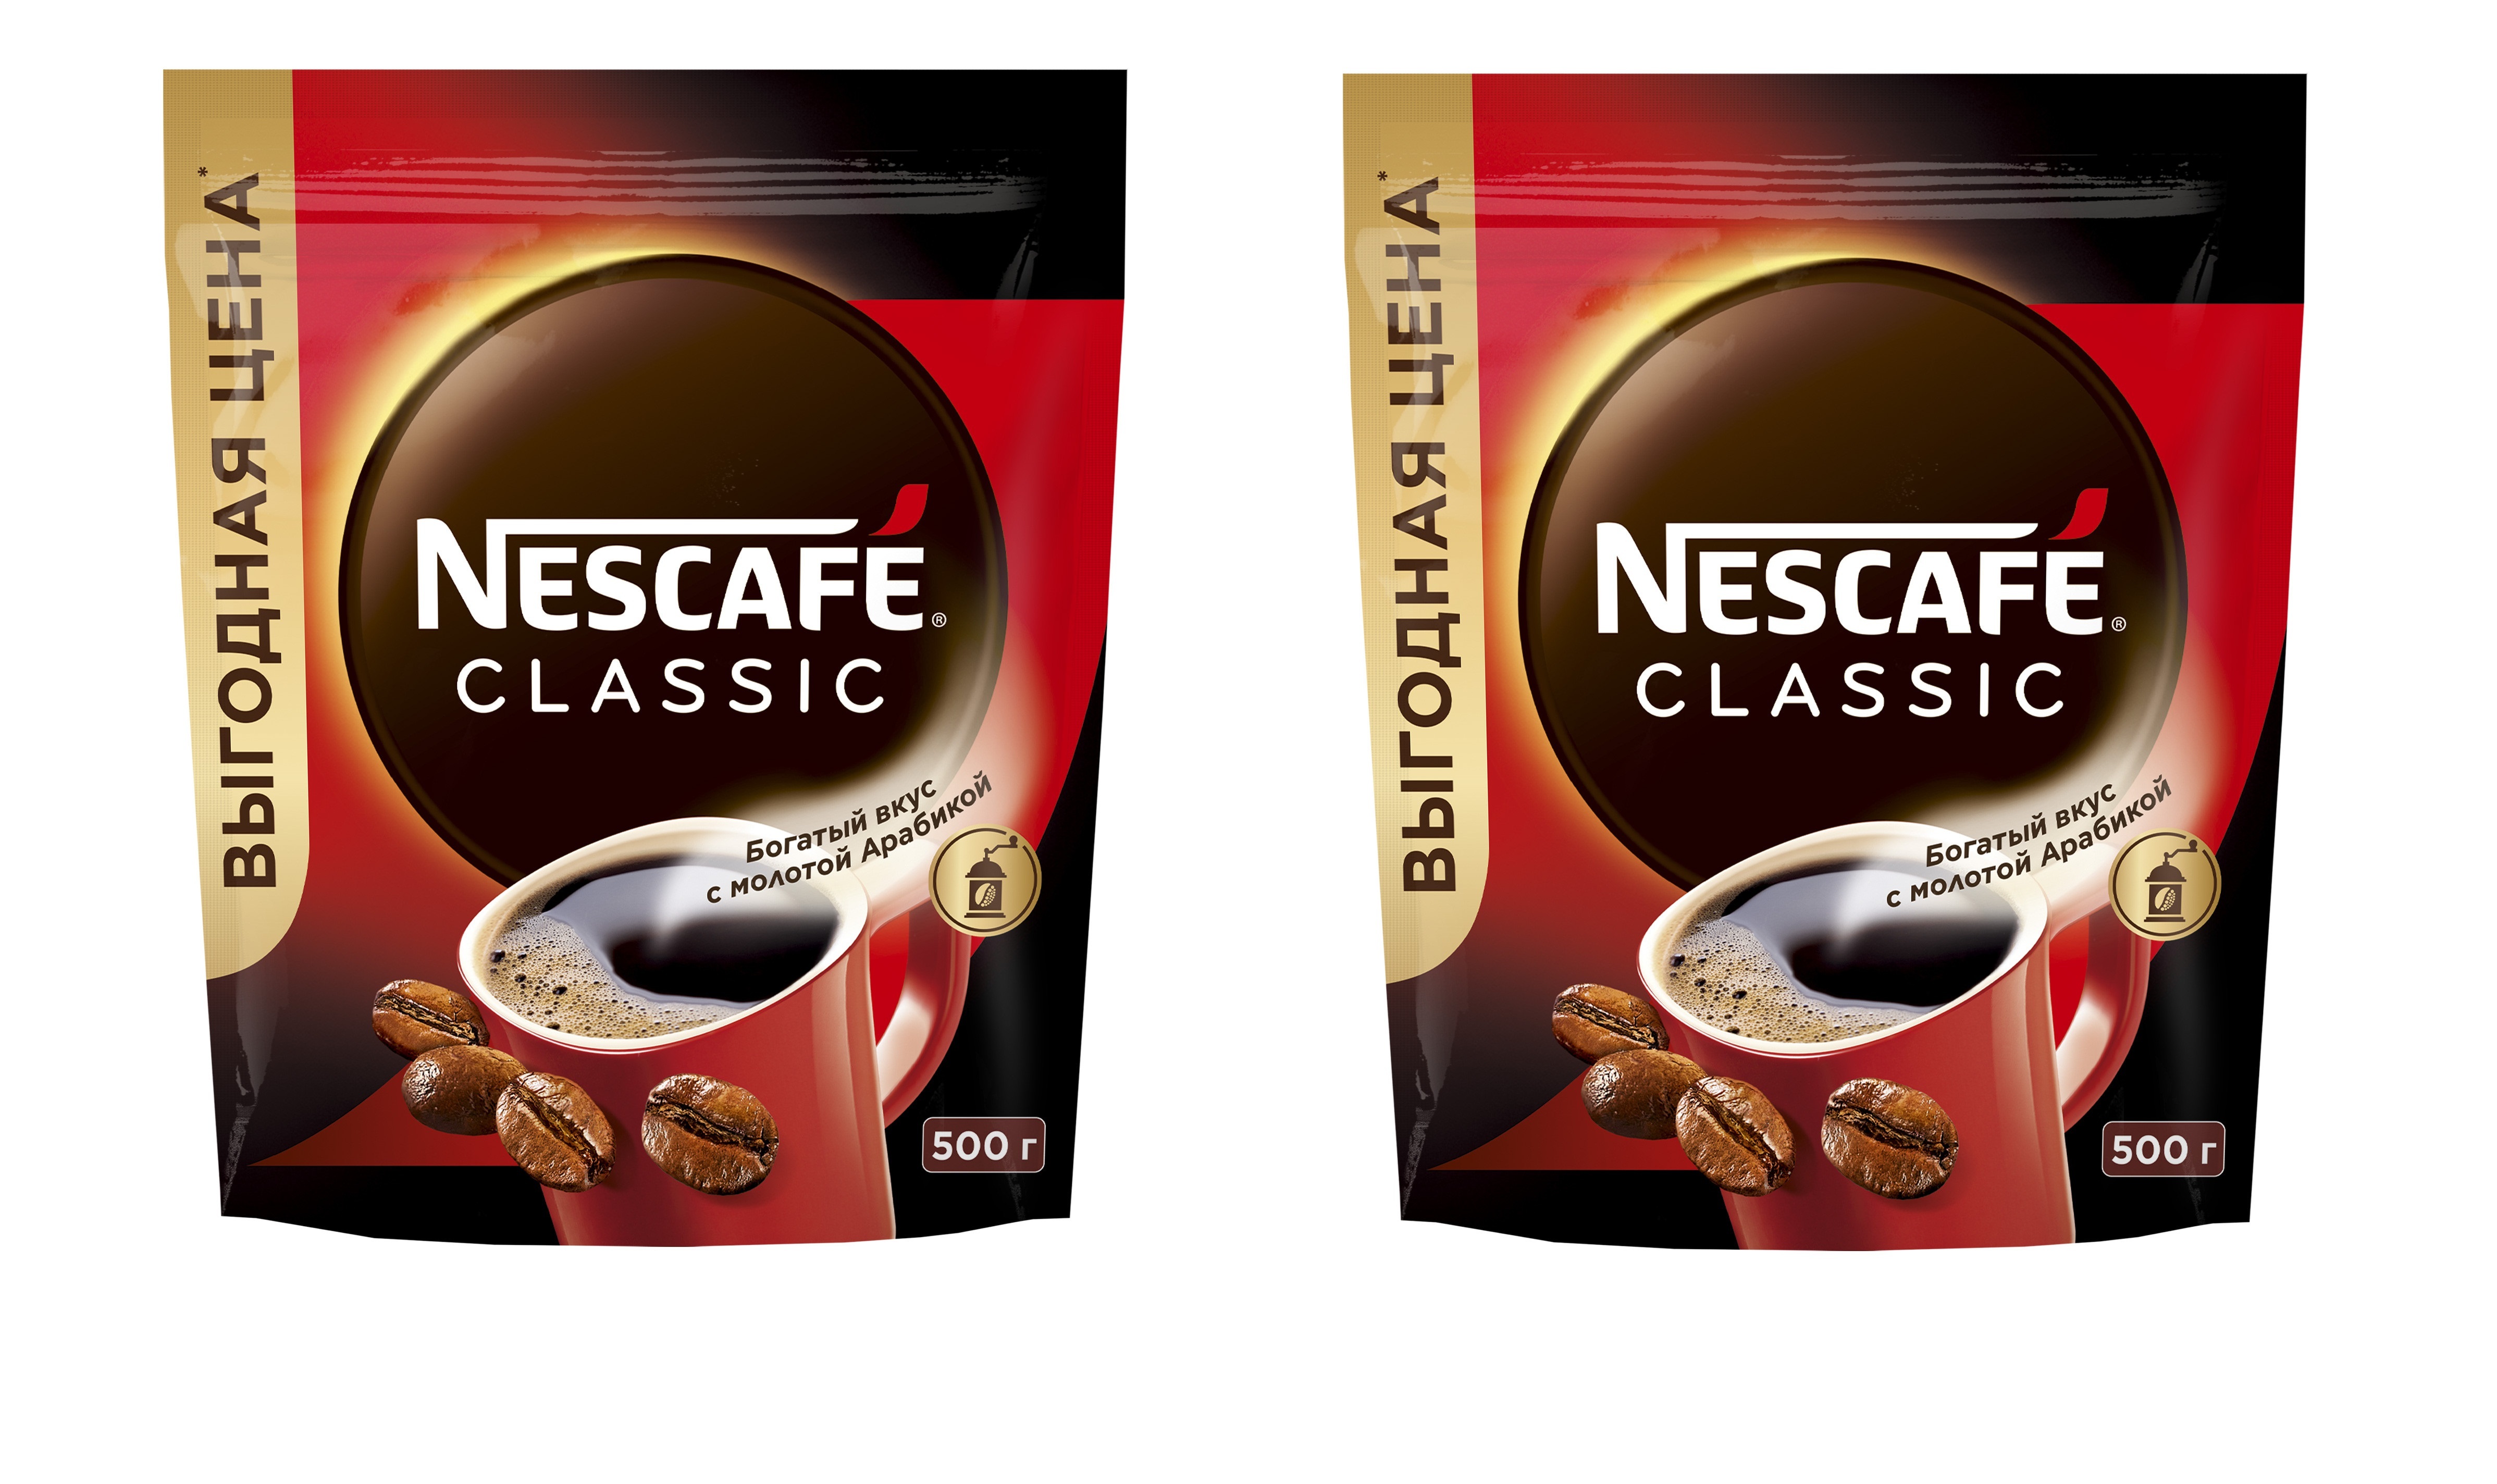 Nescafe gold 190 г. Кофе Nescafe Classic 2гр.. Кофе Нескафе 500 гр. Растворимый кофе Nescafe 190 г. Кофе Nescafe Gold пакет 500 гр.